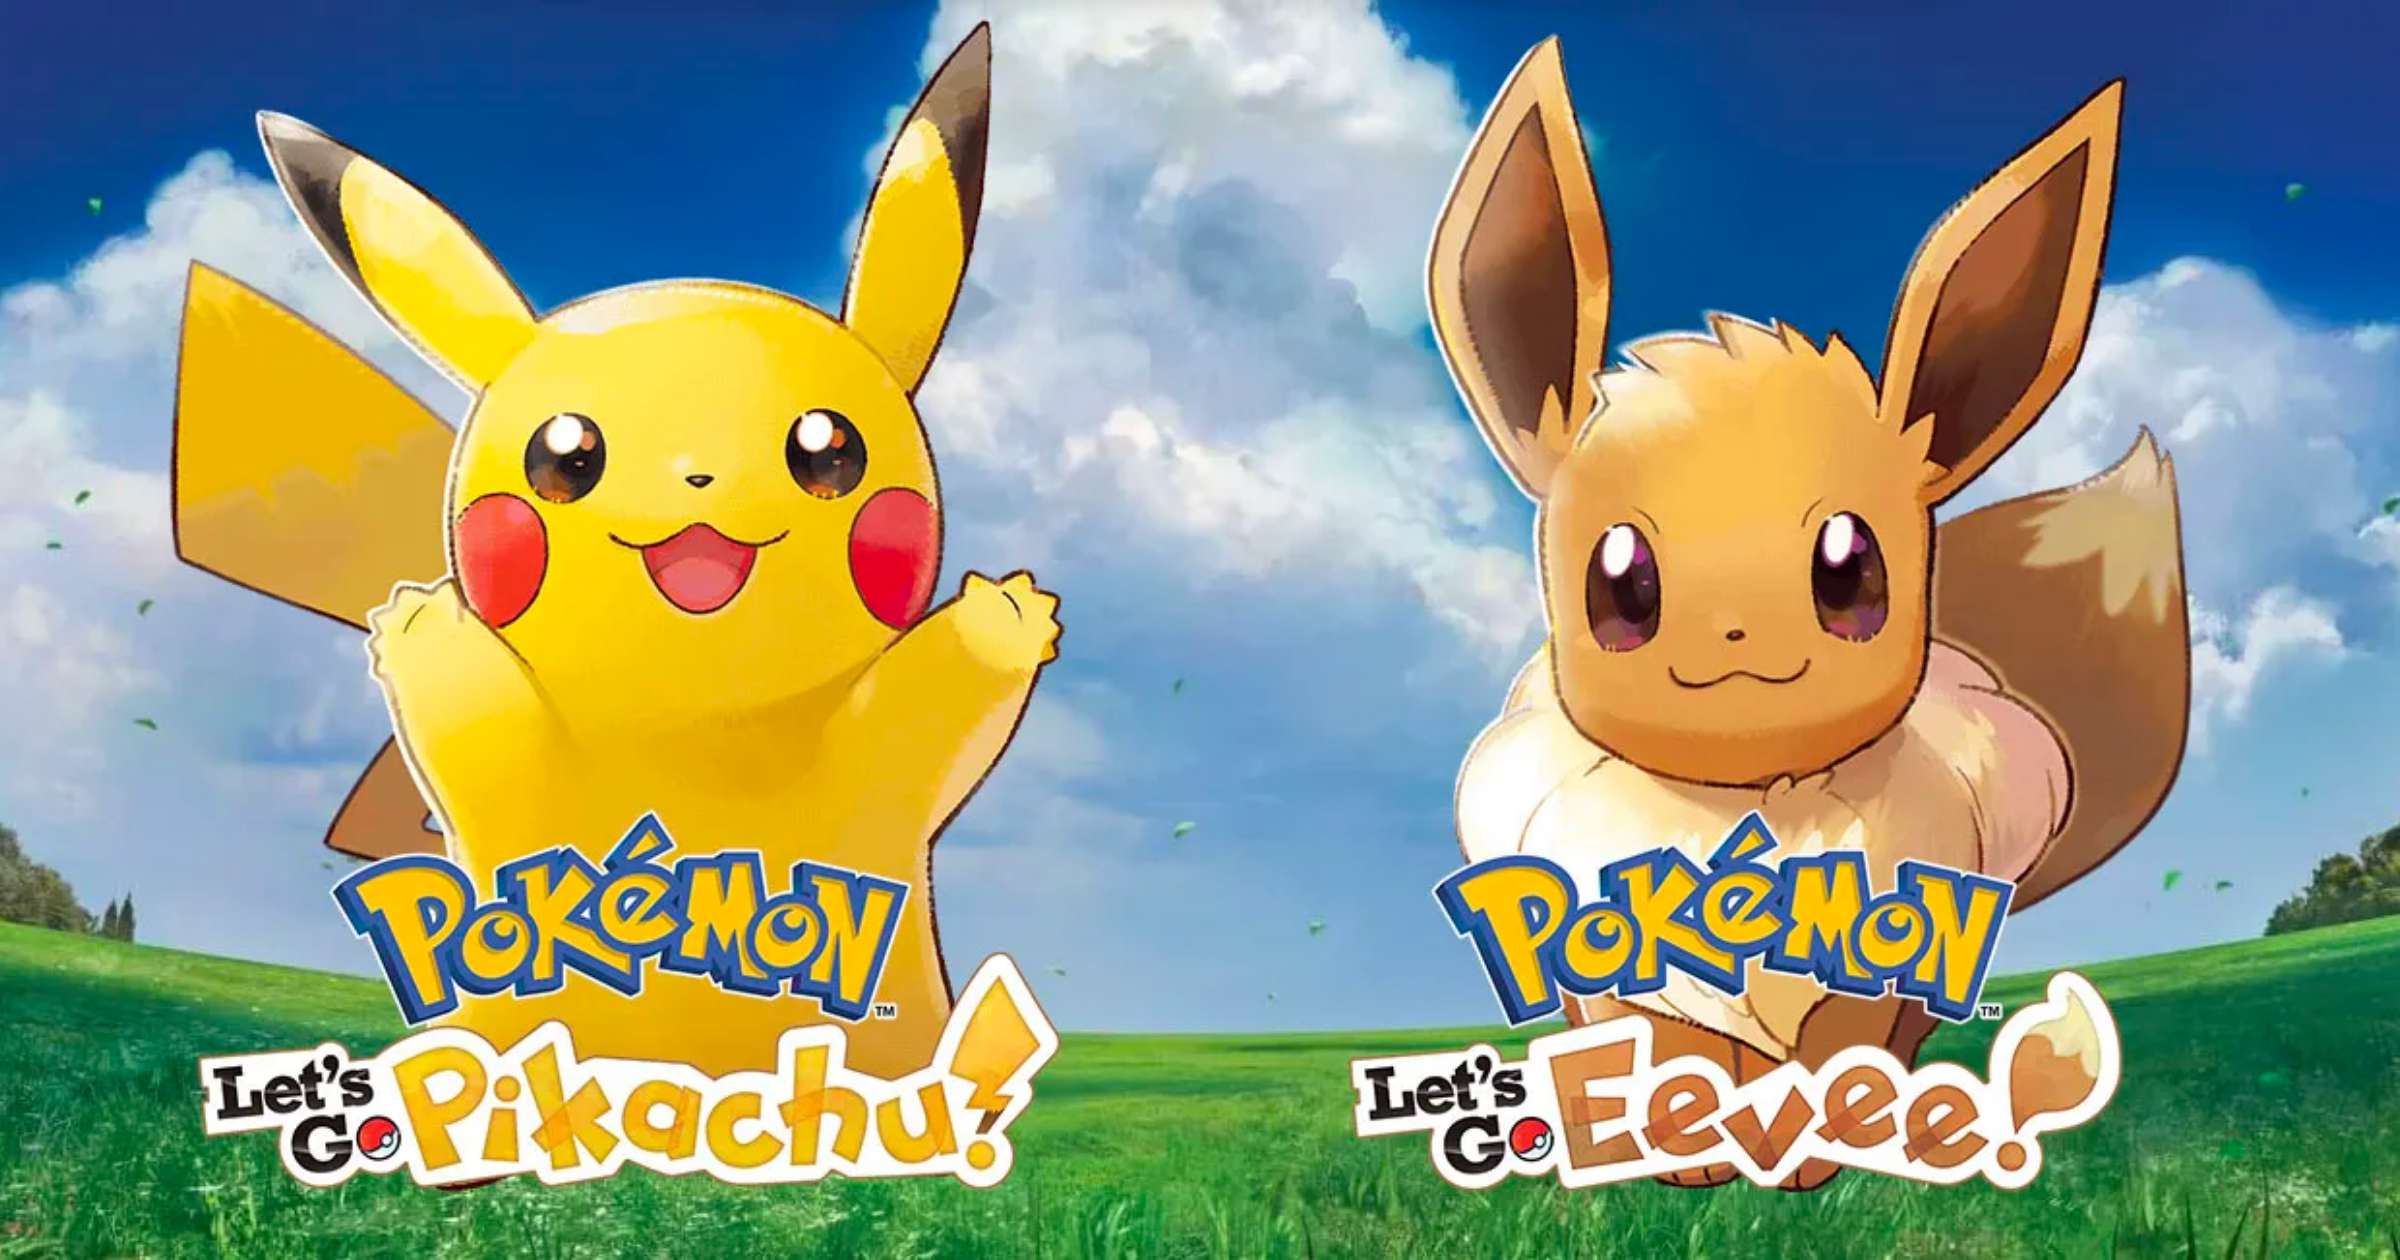 Pokémon Let's Go Eevee & Pikachu